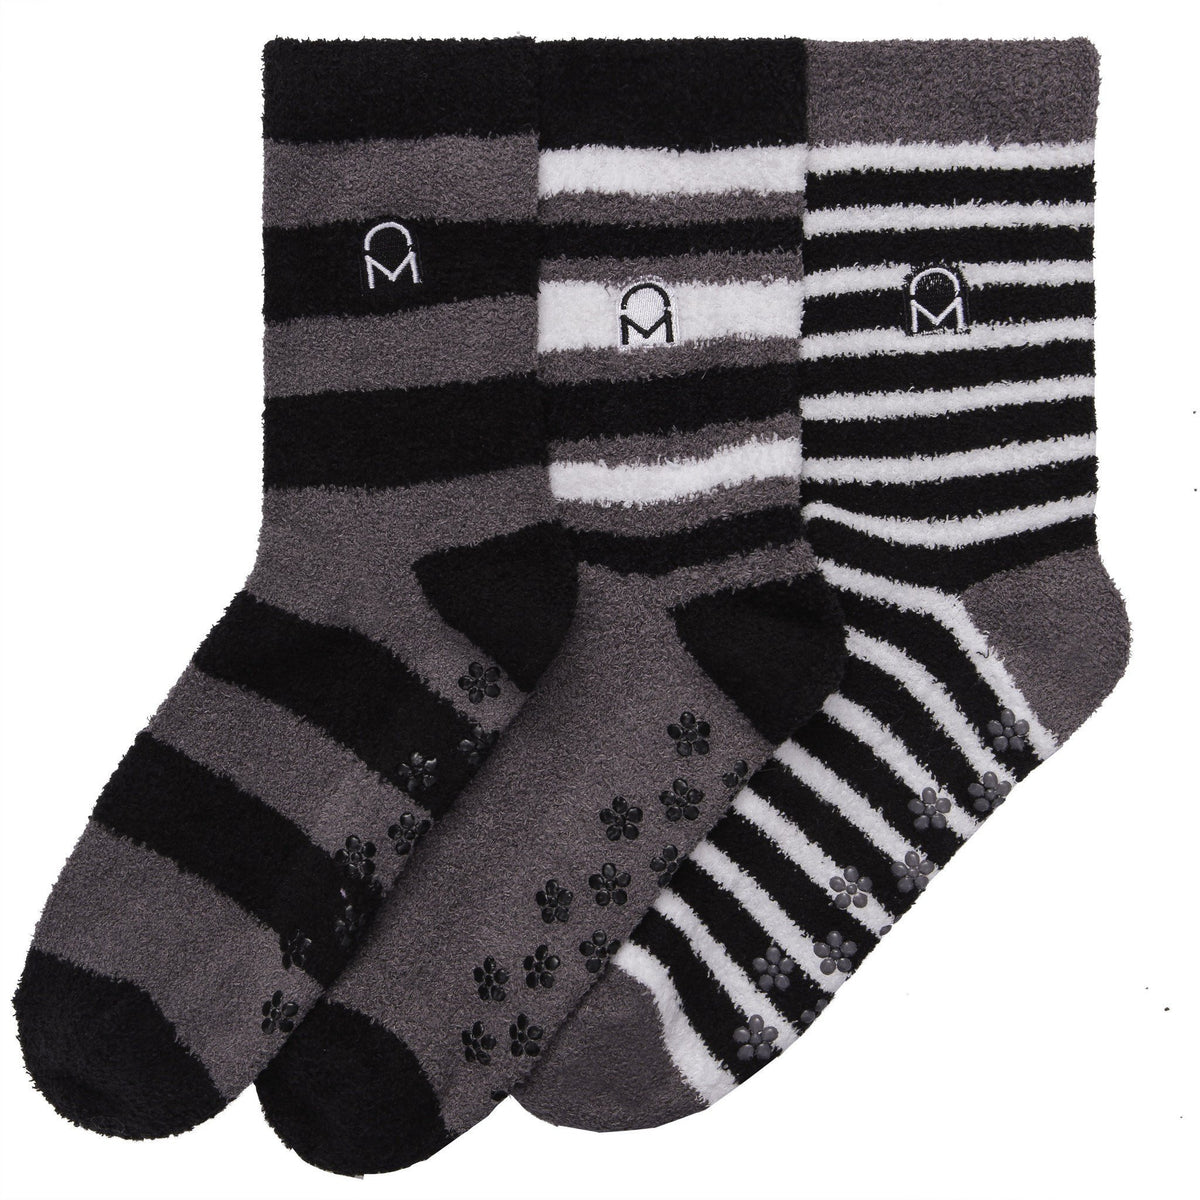 Women's Soft Anti-Skid Micro-Plush Winter Crew Socks - Set C8